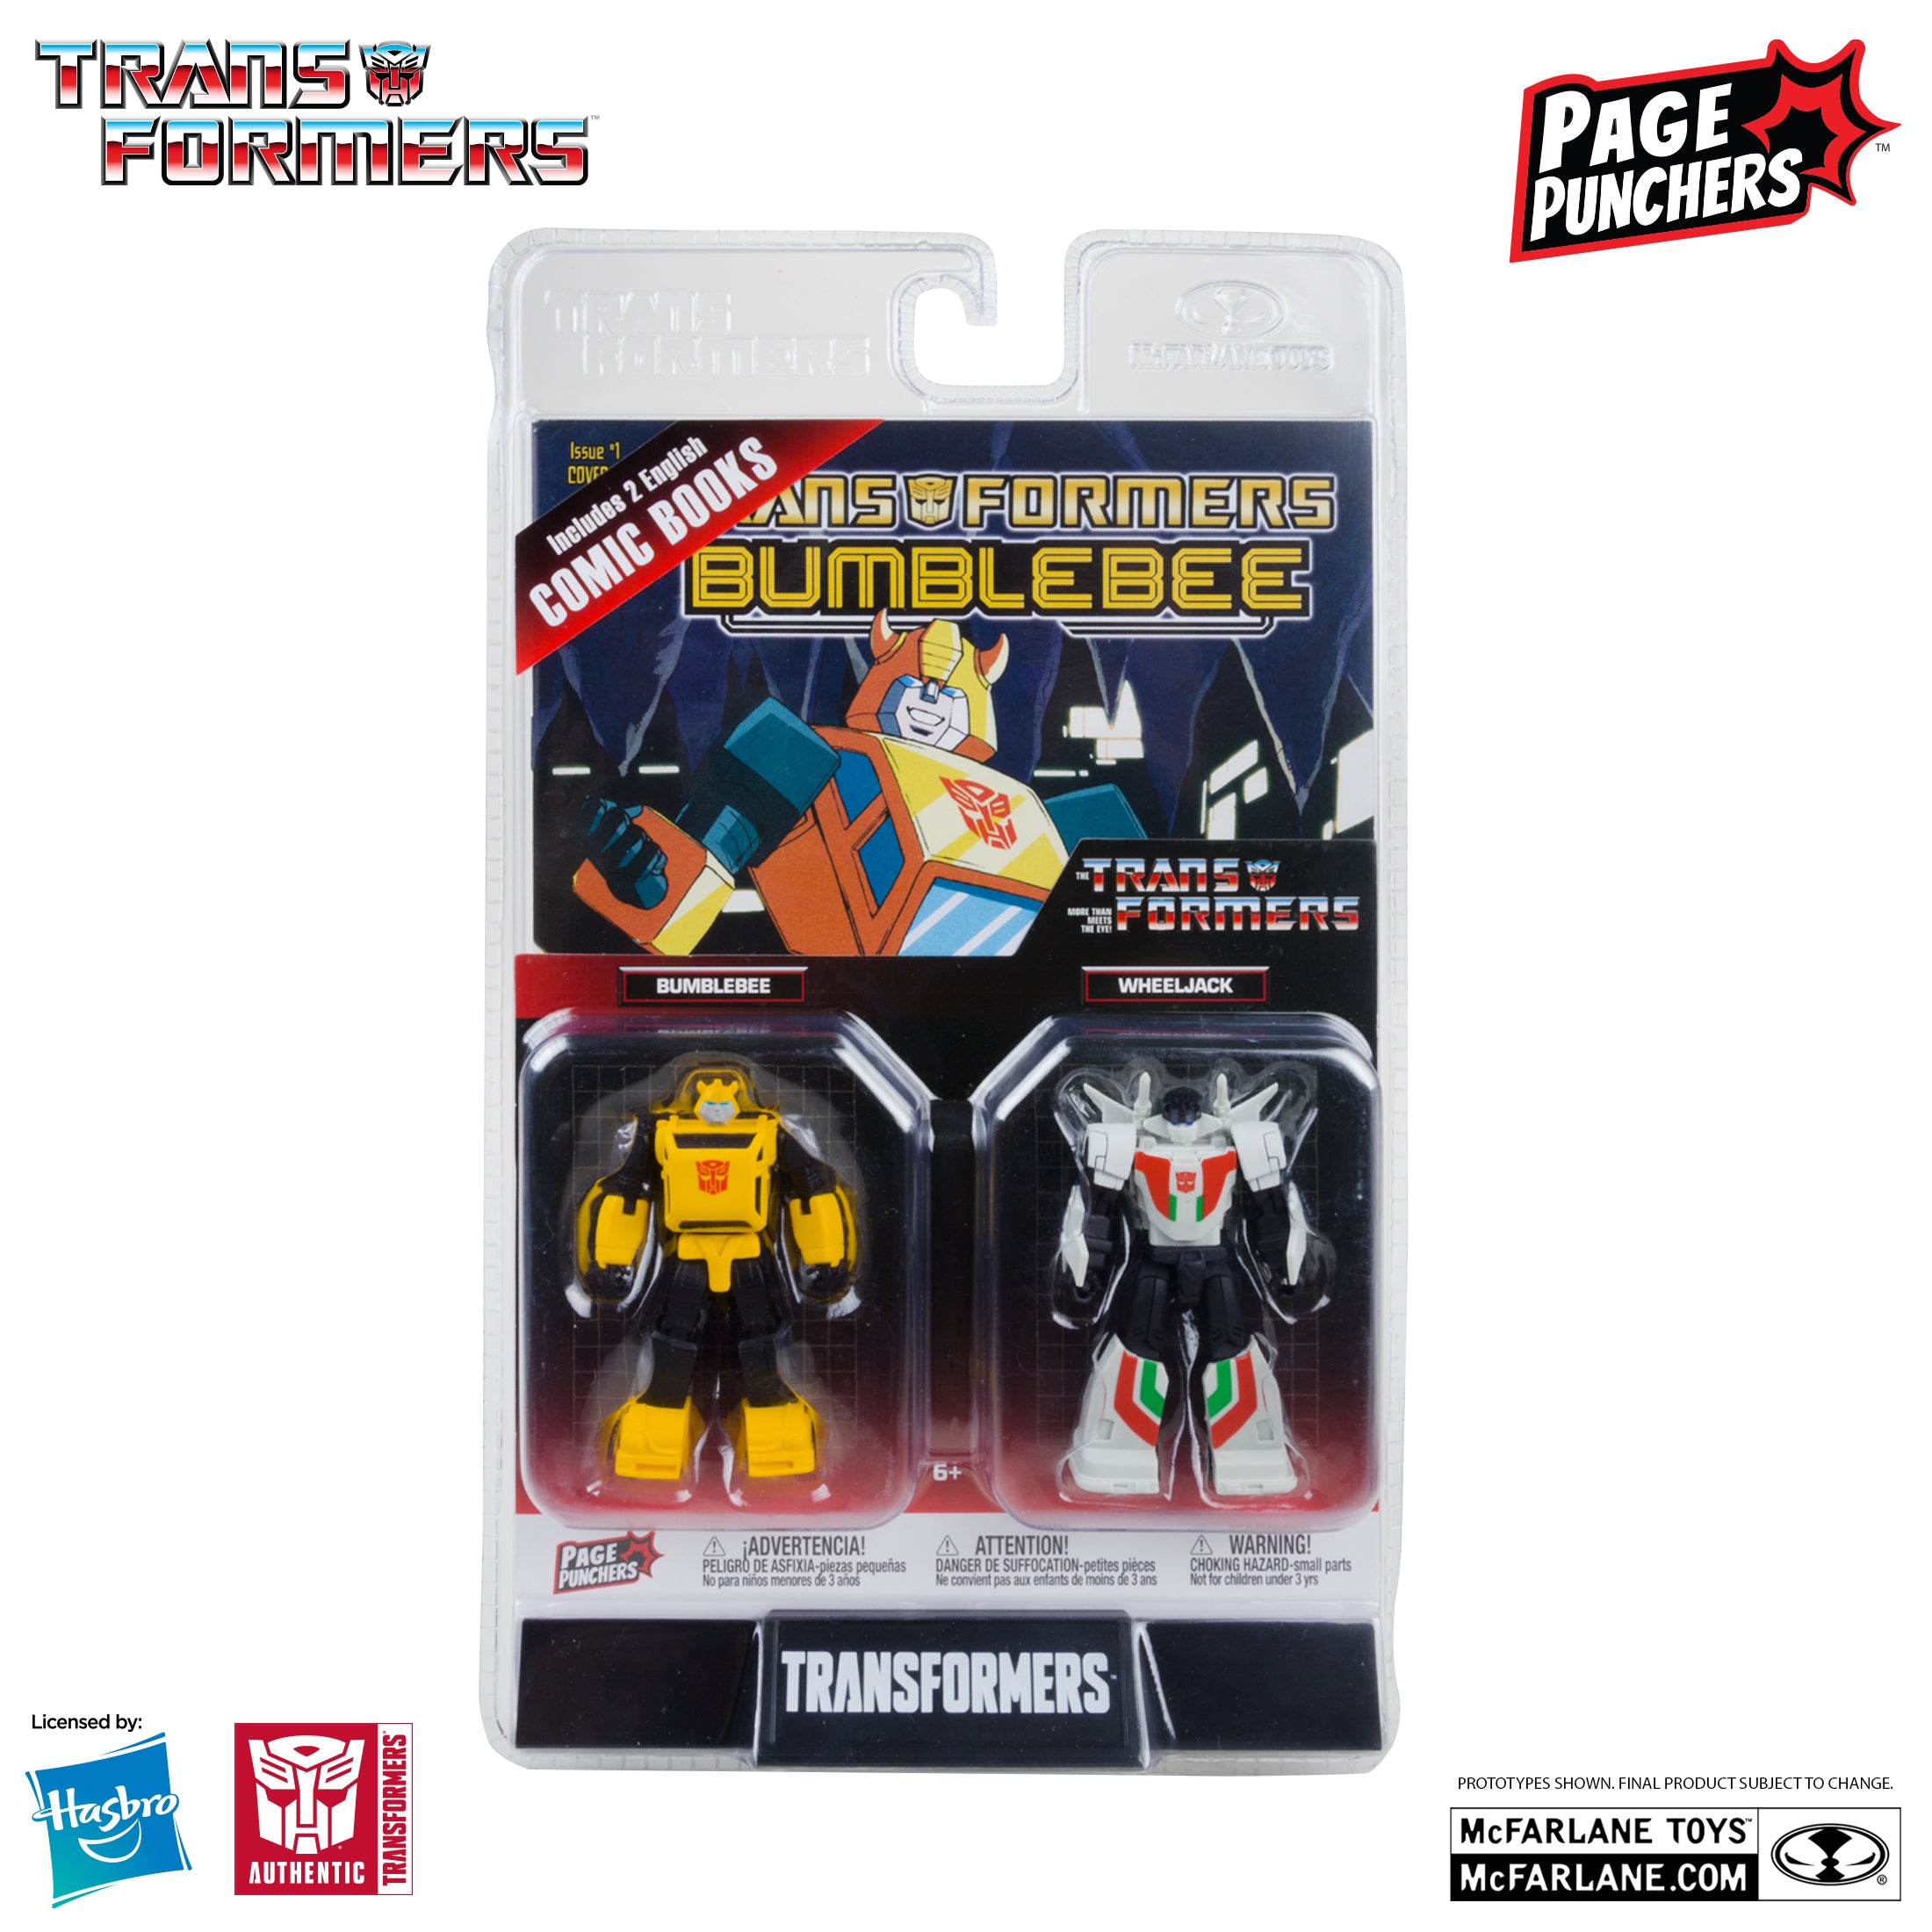 PRE-ORDER Transformers Page Punchers 3" Bumblebee & Wheeljack